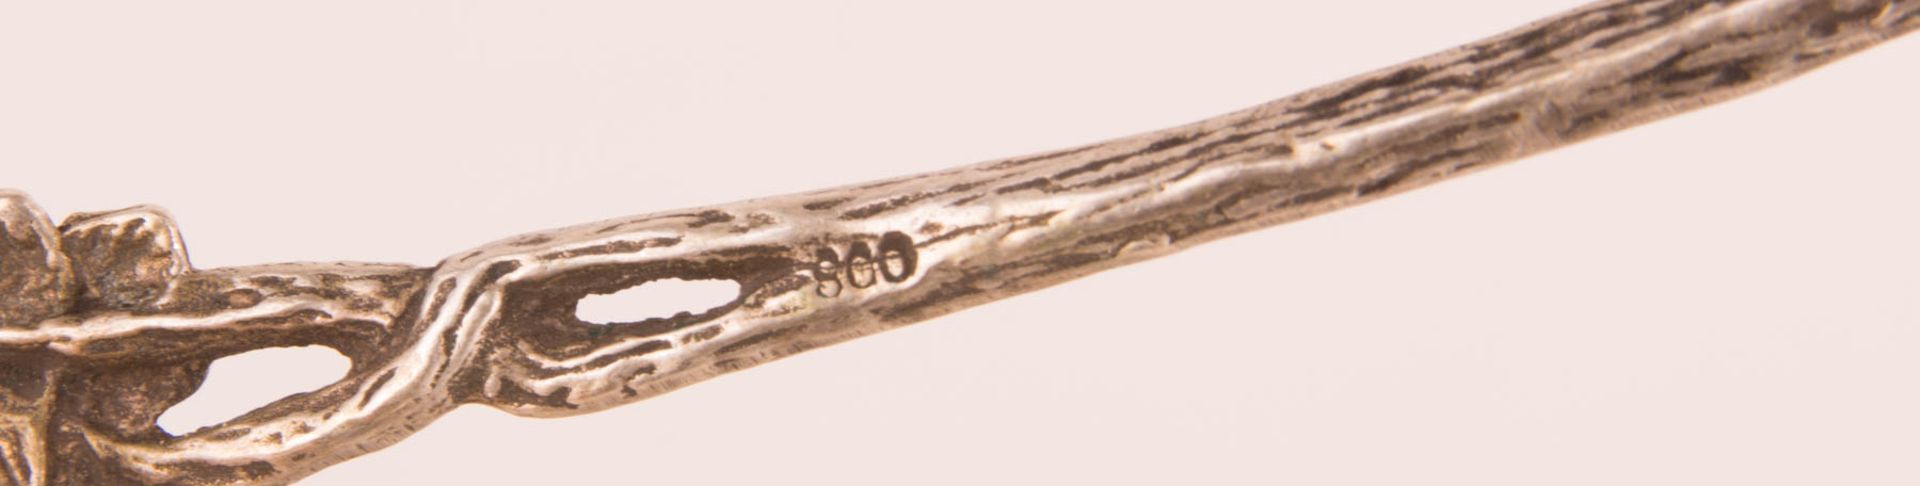 Convolute of silver cutlery, 800 silver. - Image 10 of 10